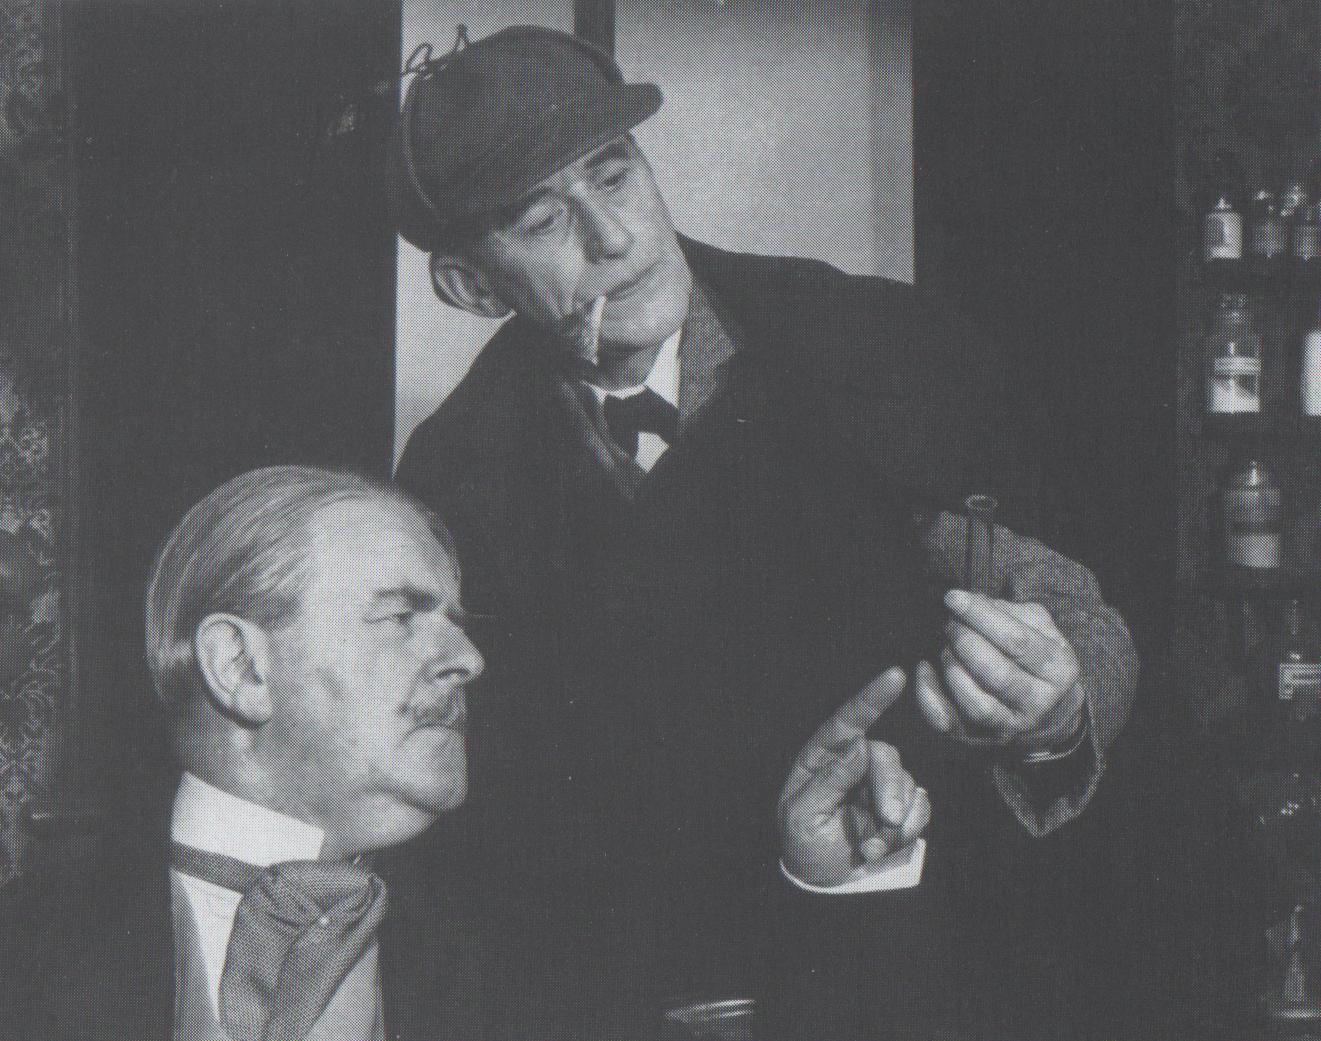 Norman Shelley as Dr. Watson